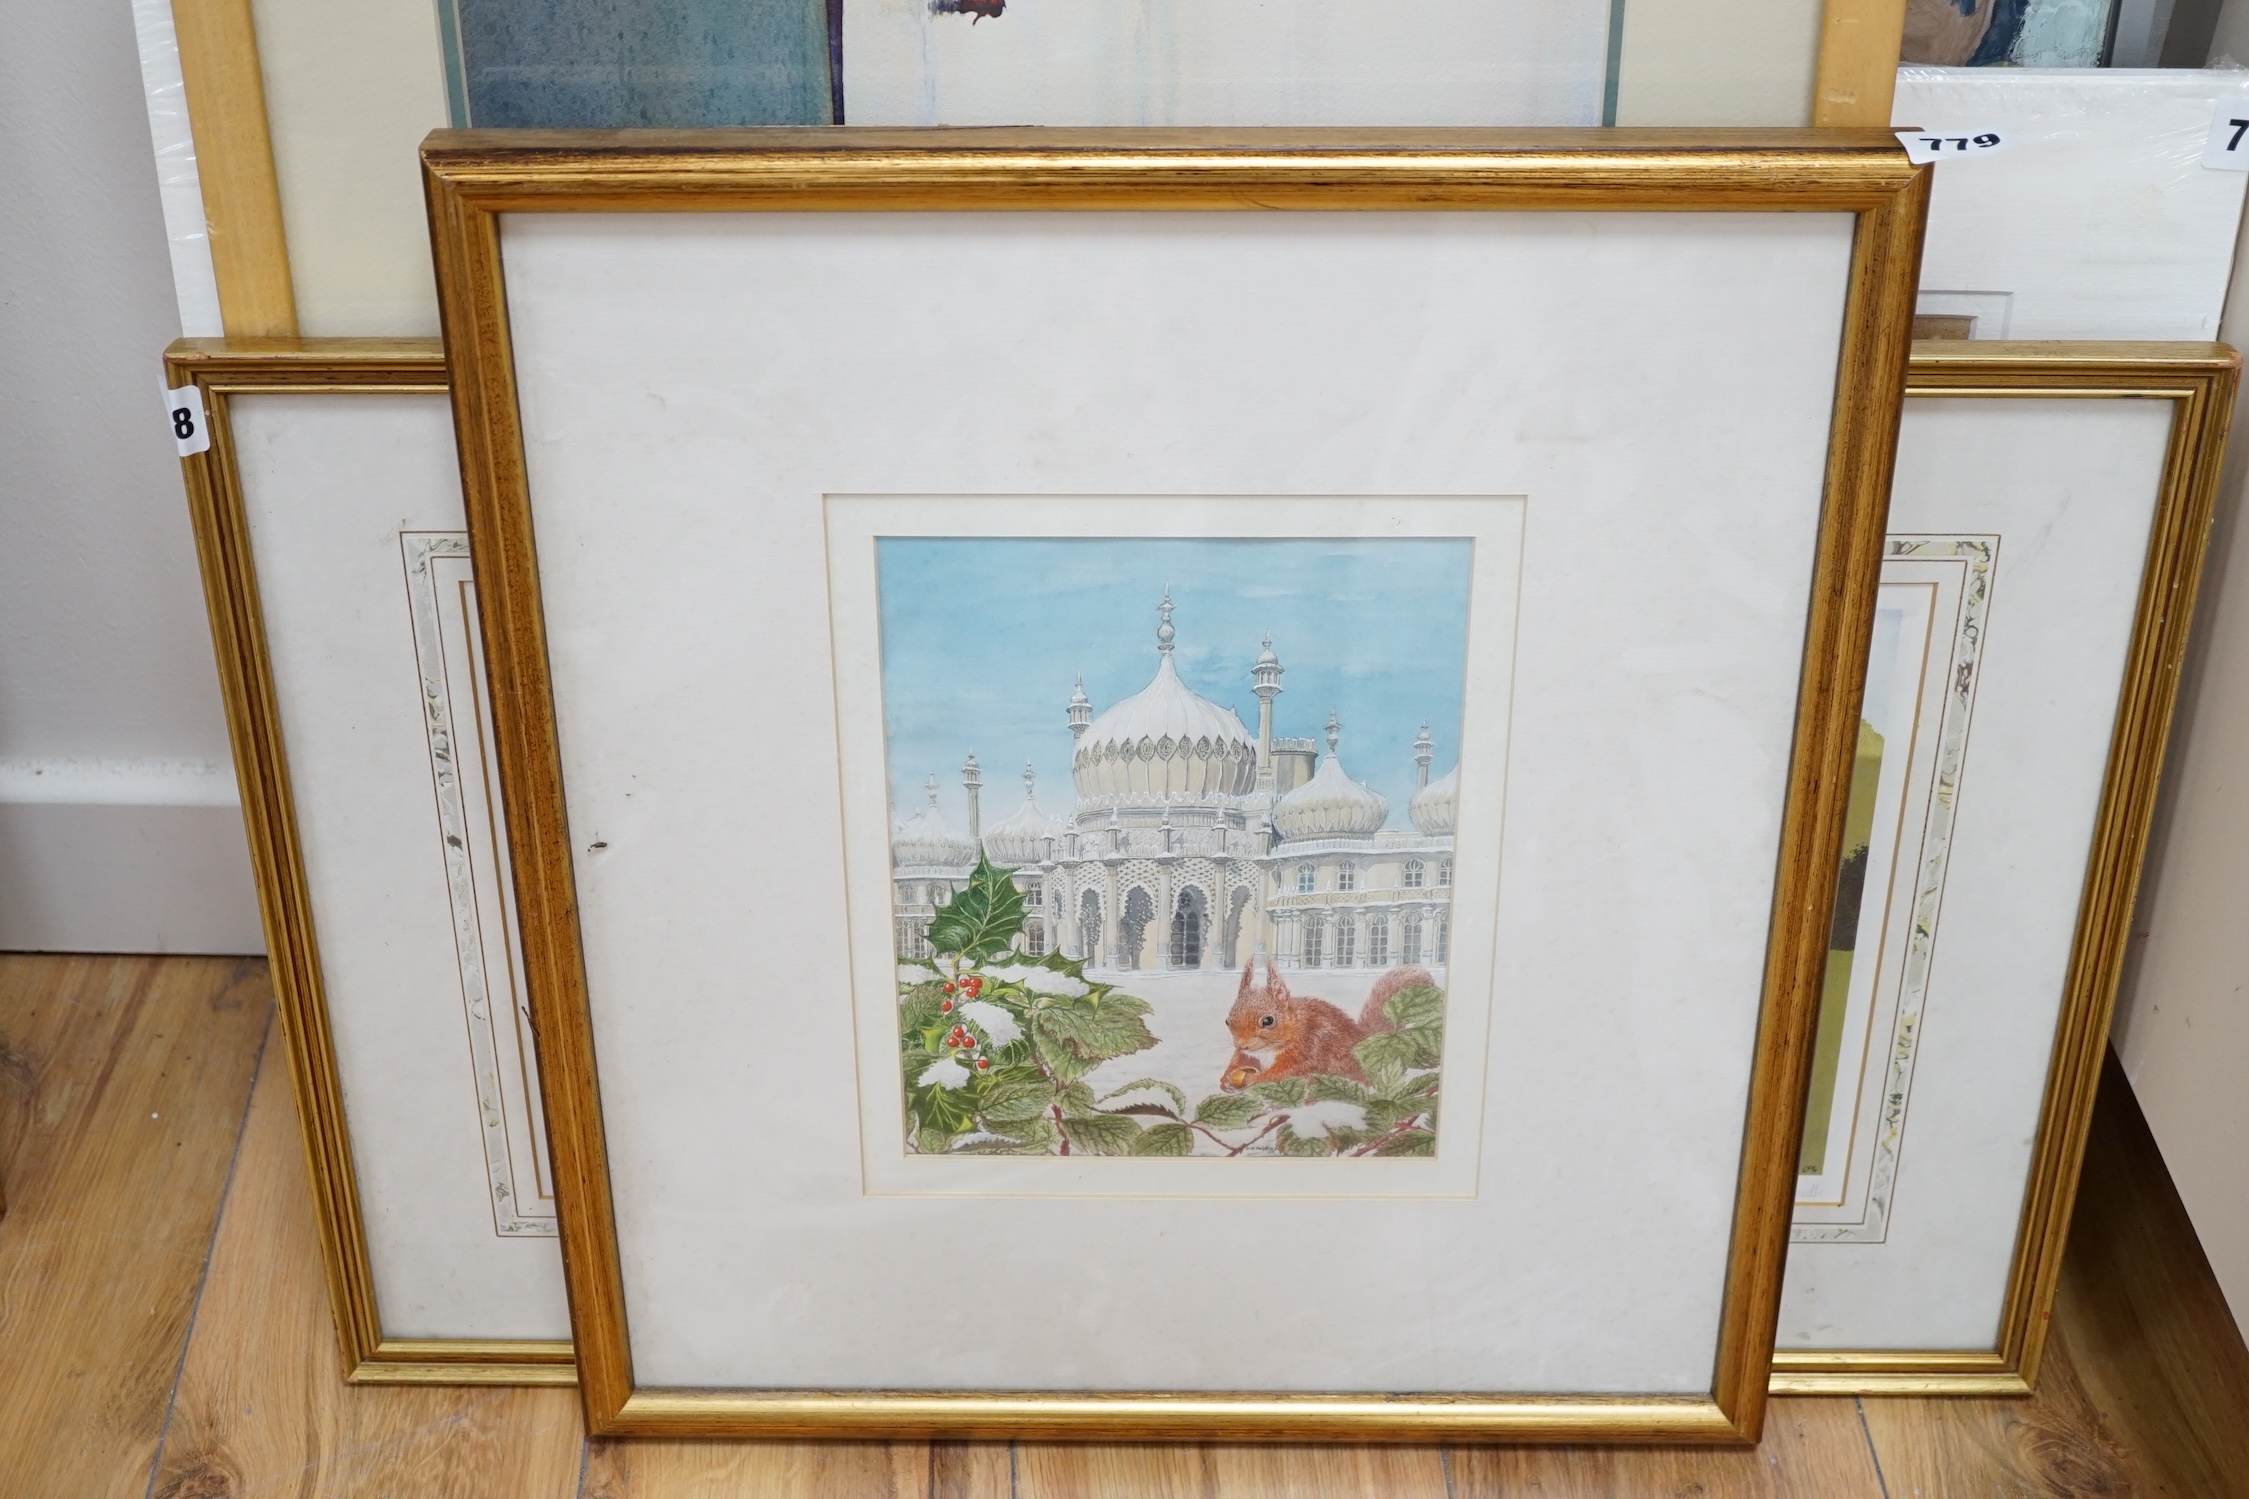 David Holden, watercolour, 'The Pavilion, Brighton', signed, 23 x 18.5cm. Condition - fair to good